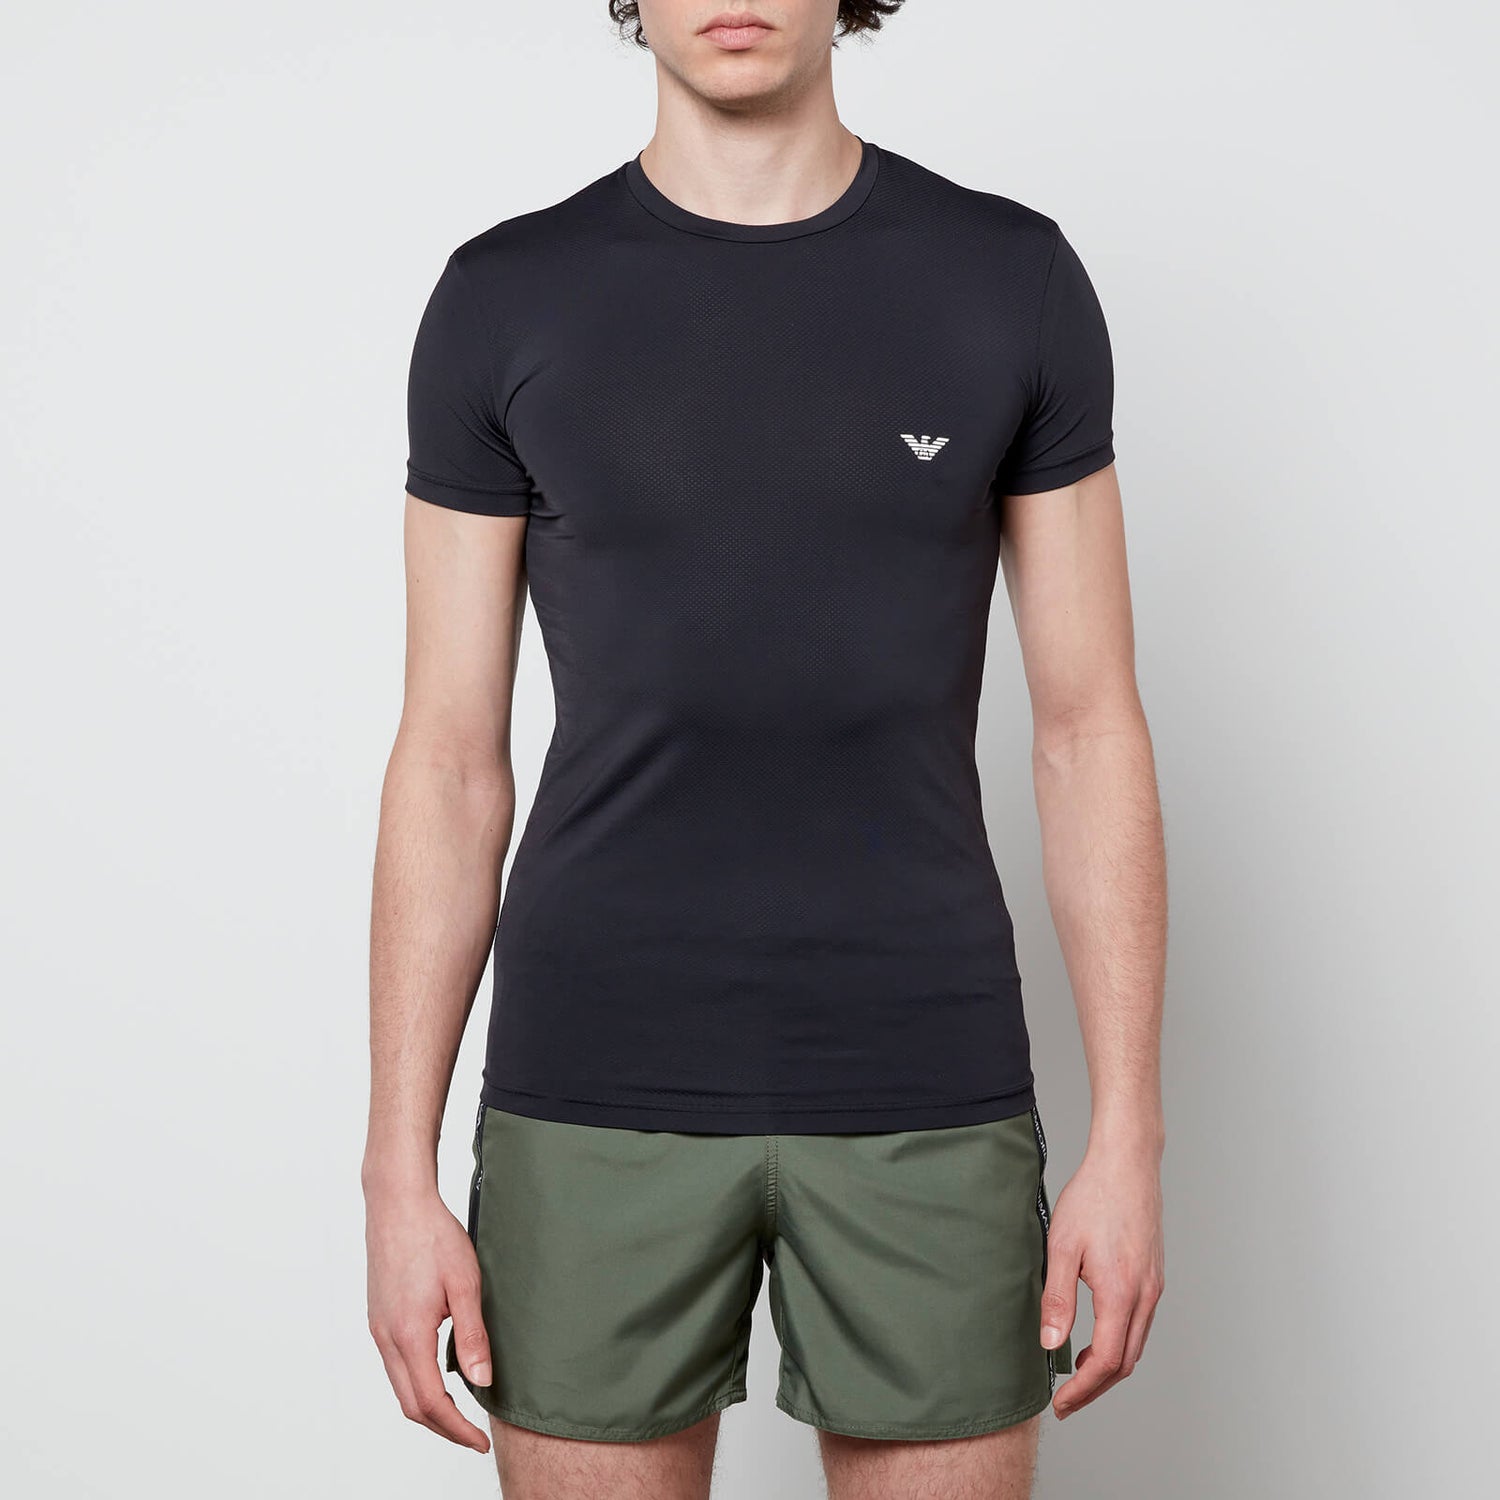 Emporio Armani Men's Mesh Microfiber T-Shirt - Black - S